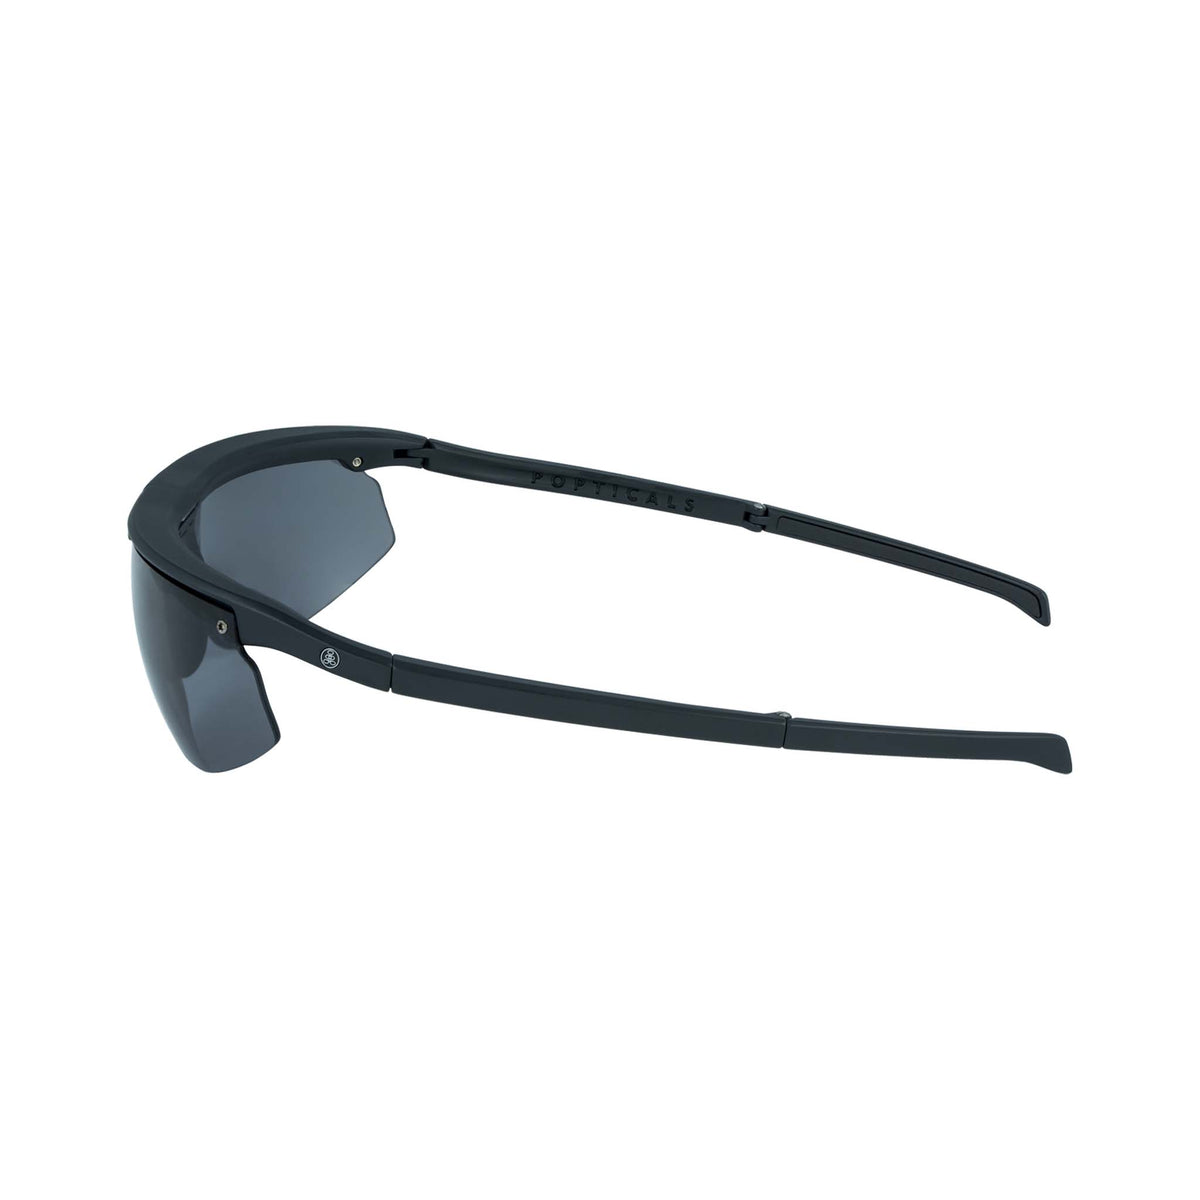 Popticals, Premium Compact Sunglasses, PopStar, 010040-BMGP, Polarized Sunglasses, Matte Black Frame, Gray Lenses, Side View